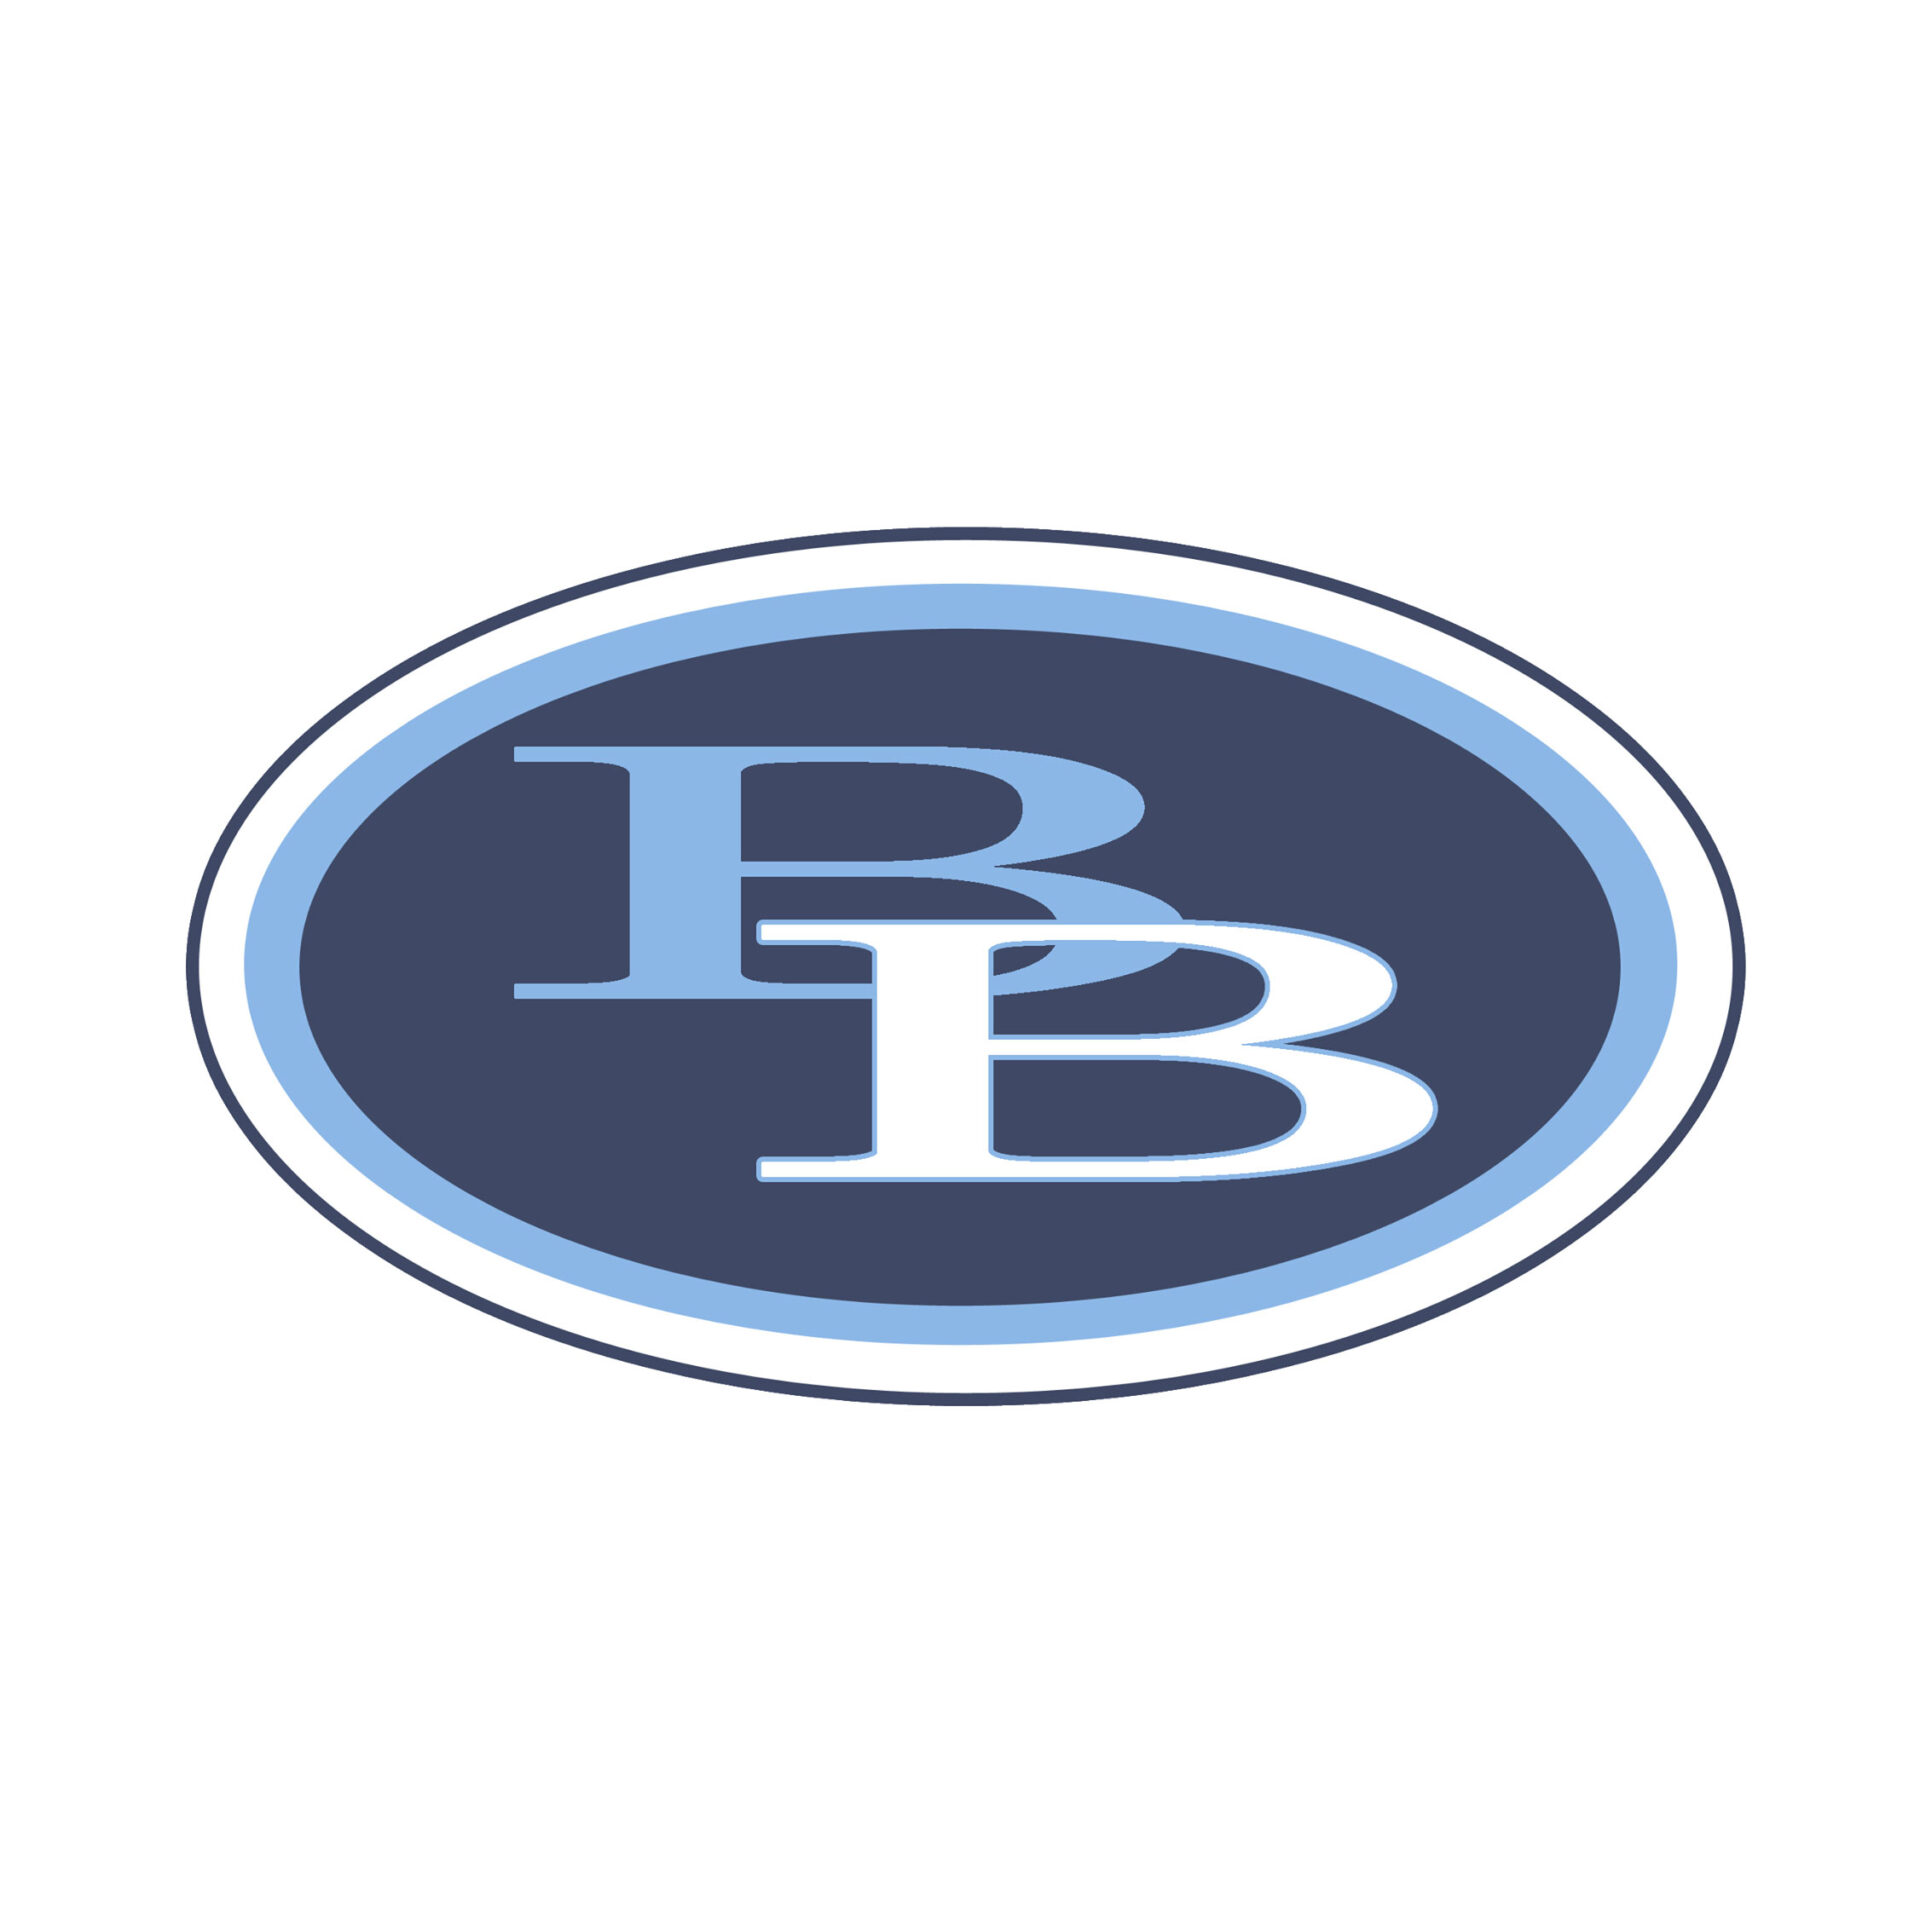 The logo of Burrell School District